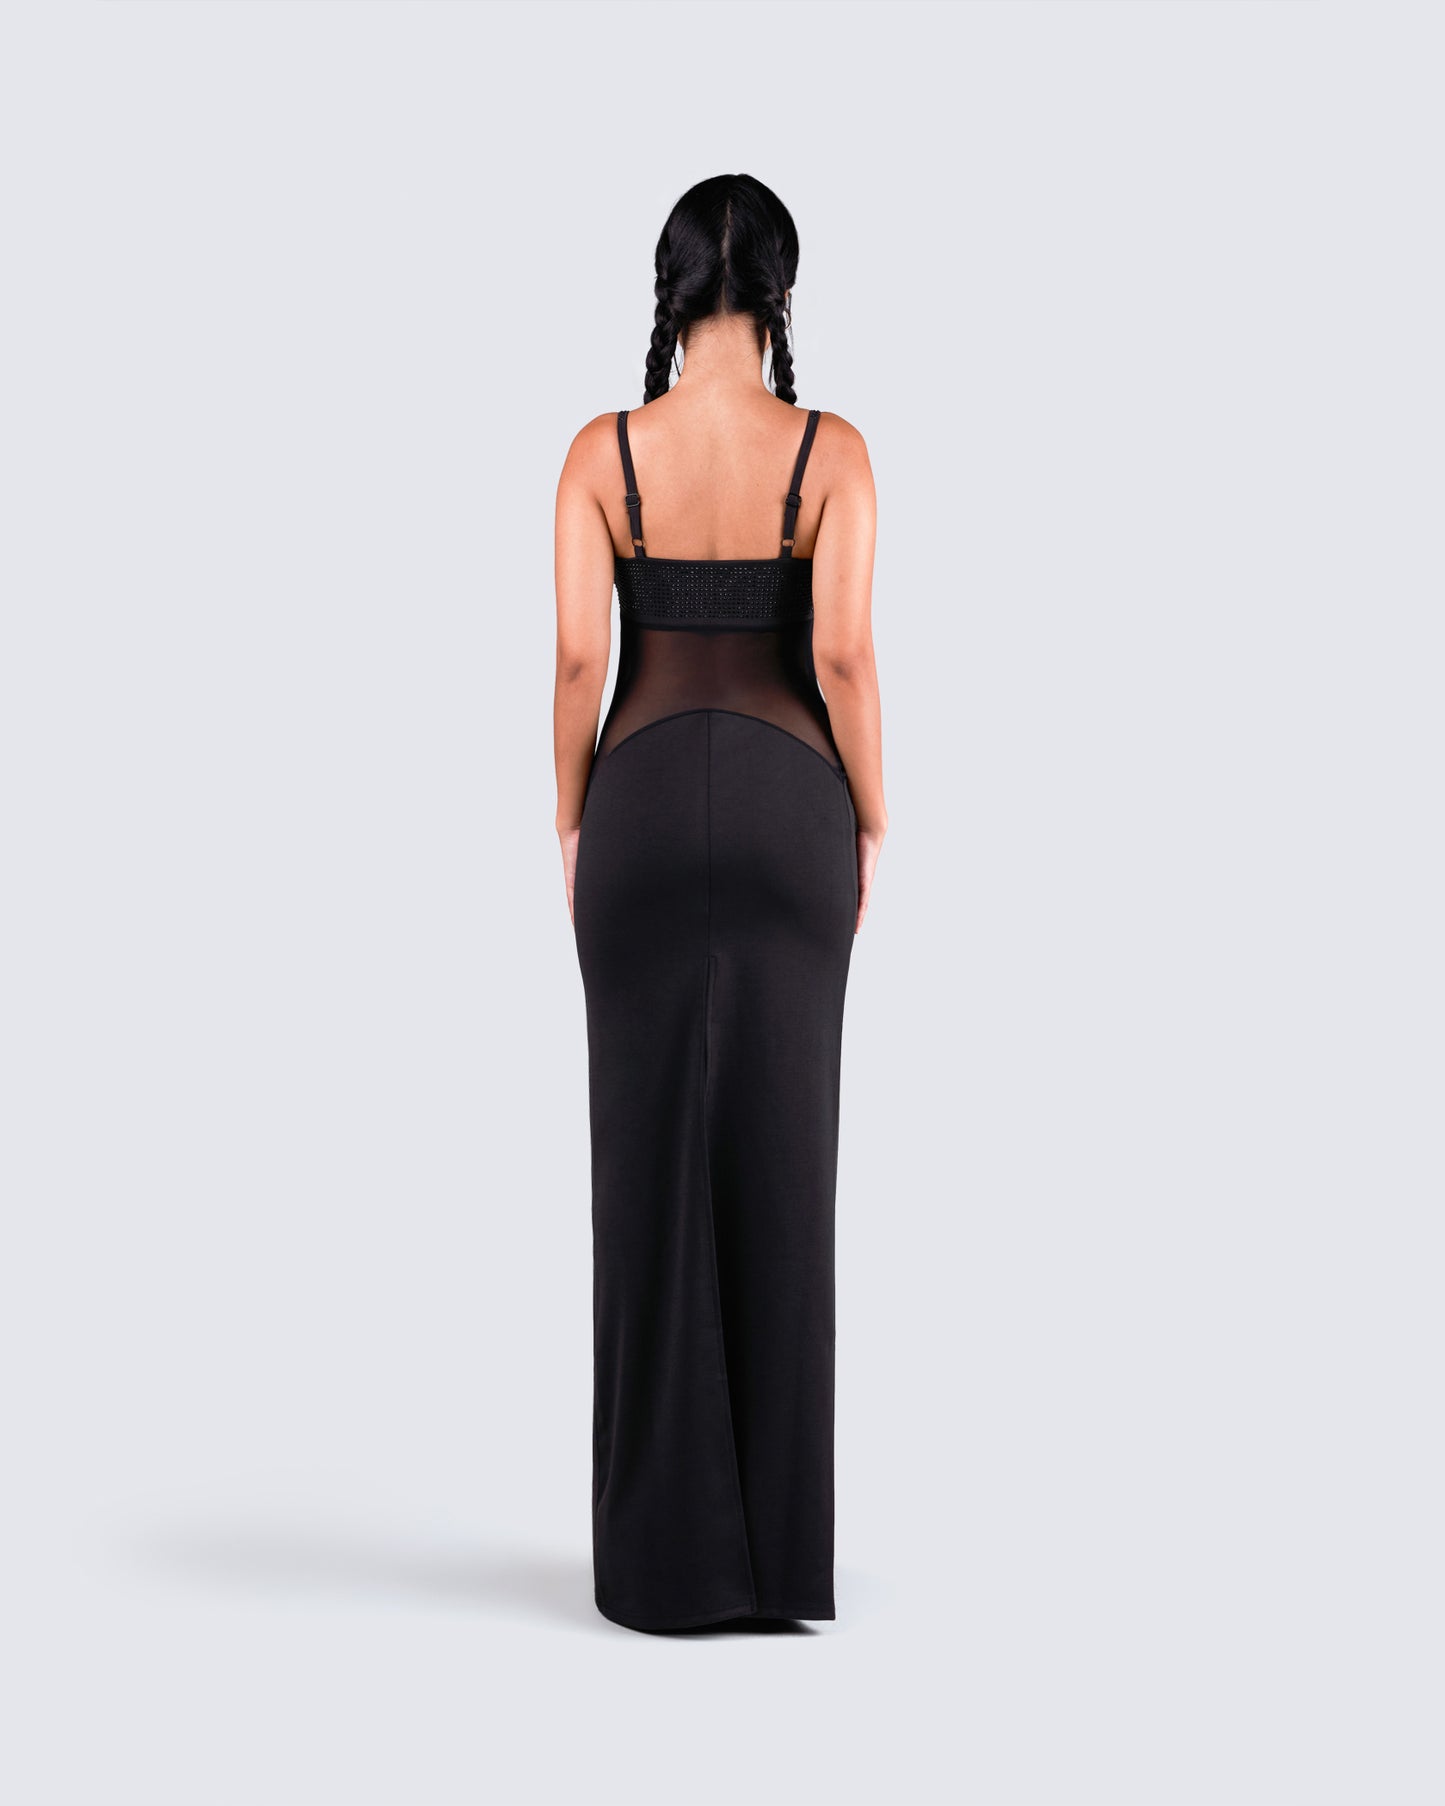 Tahlia Black Rhinestone Maxi Dress